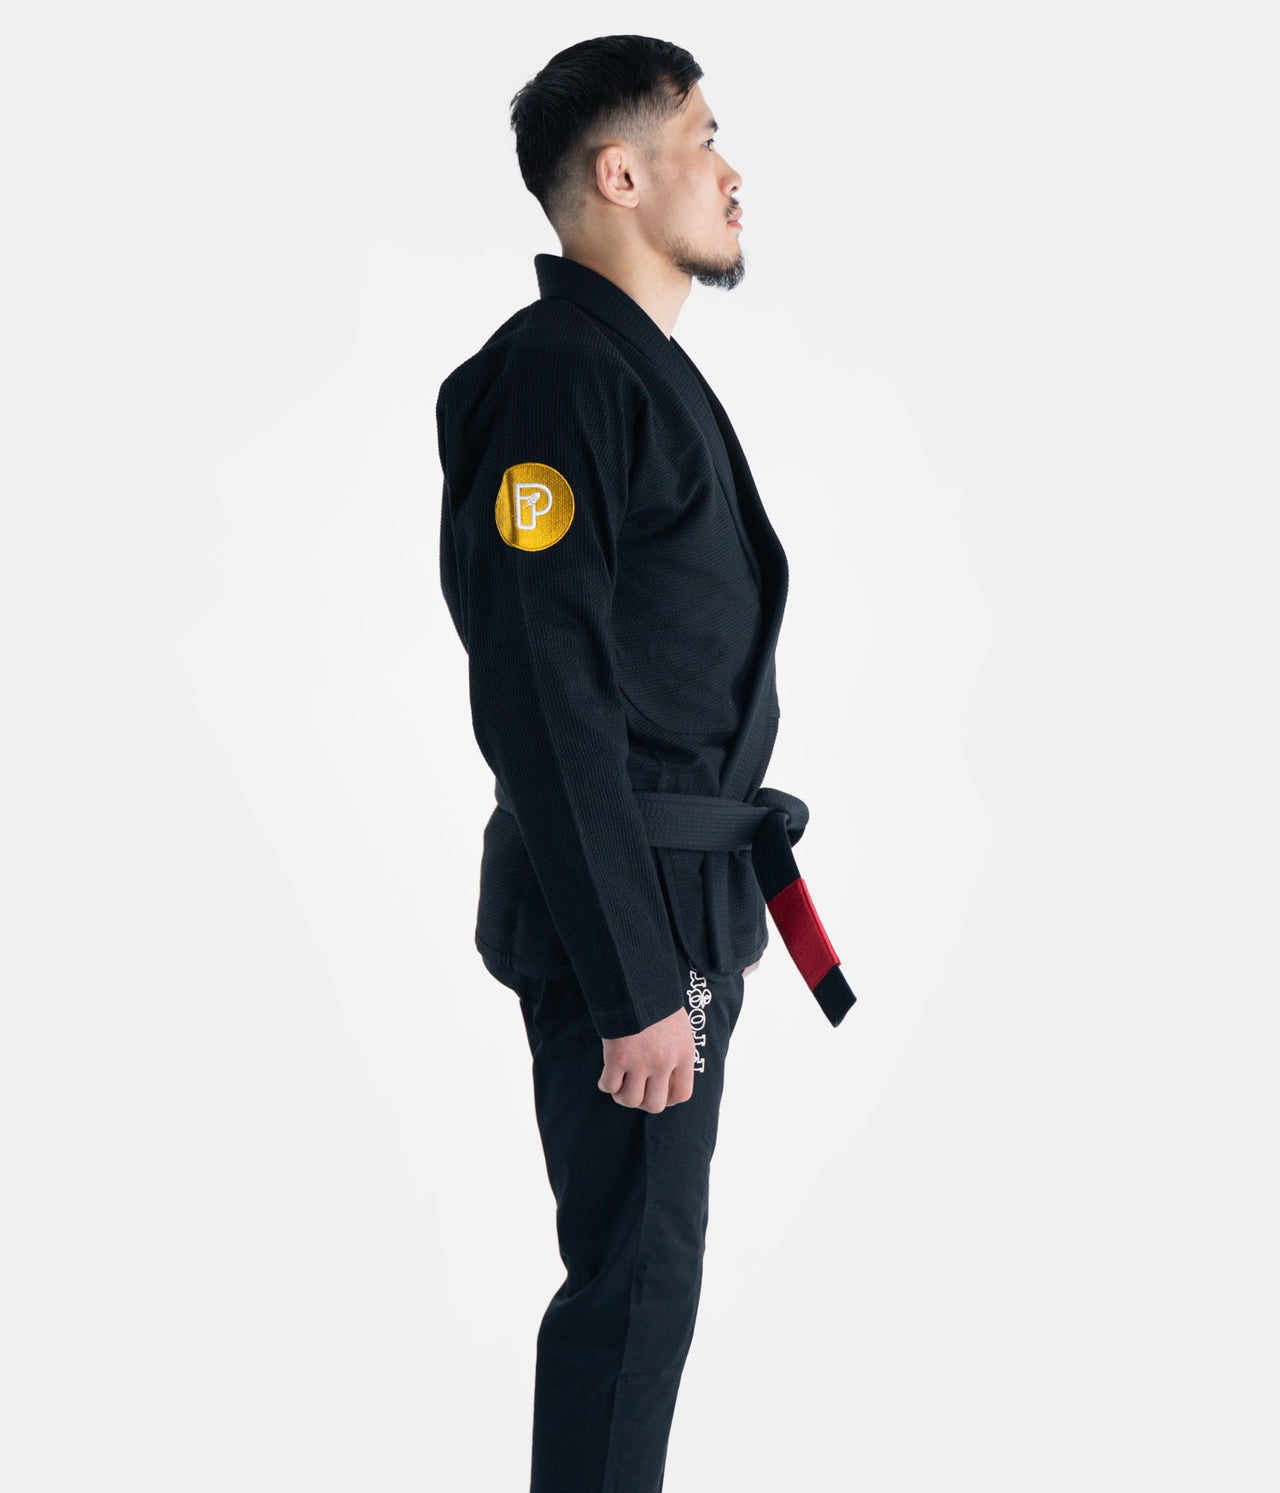 【お取寄せ商品】Progress Jiu Jitsu / Featherlight Lightweight Competition 柔術衣 Black